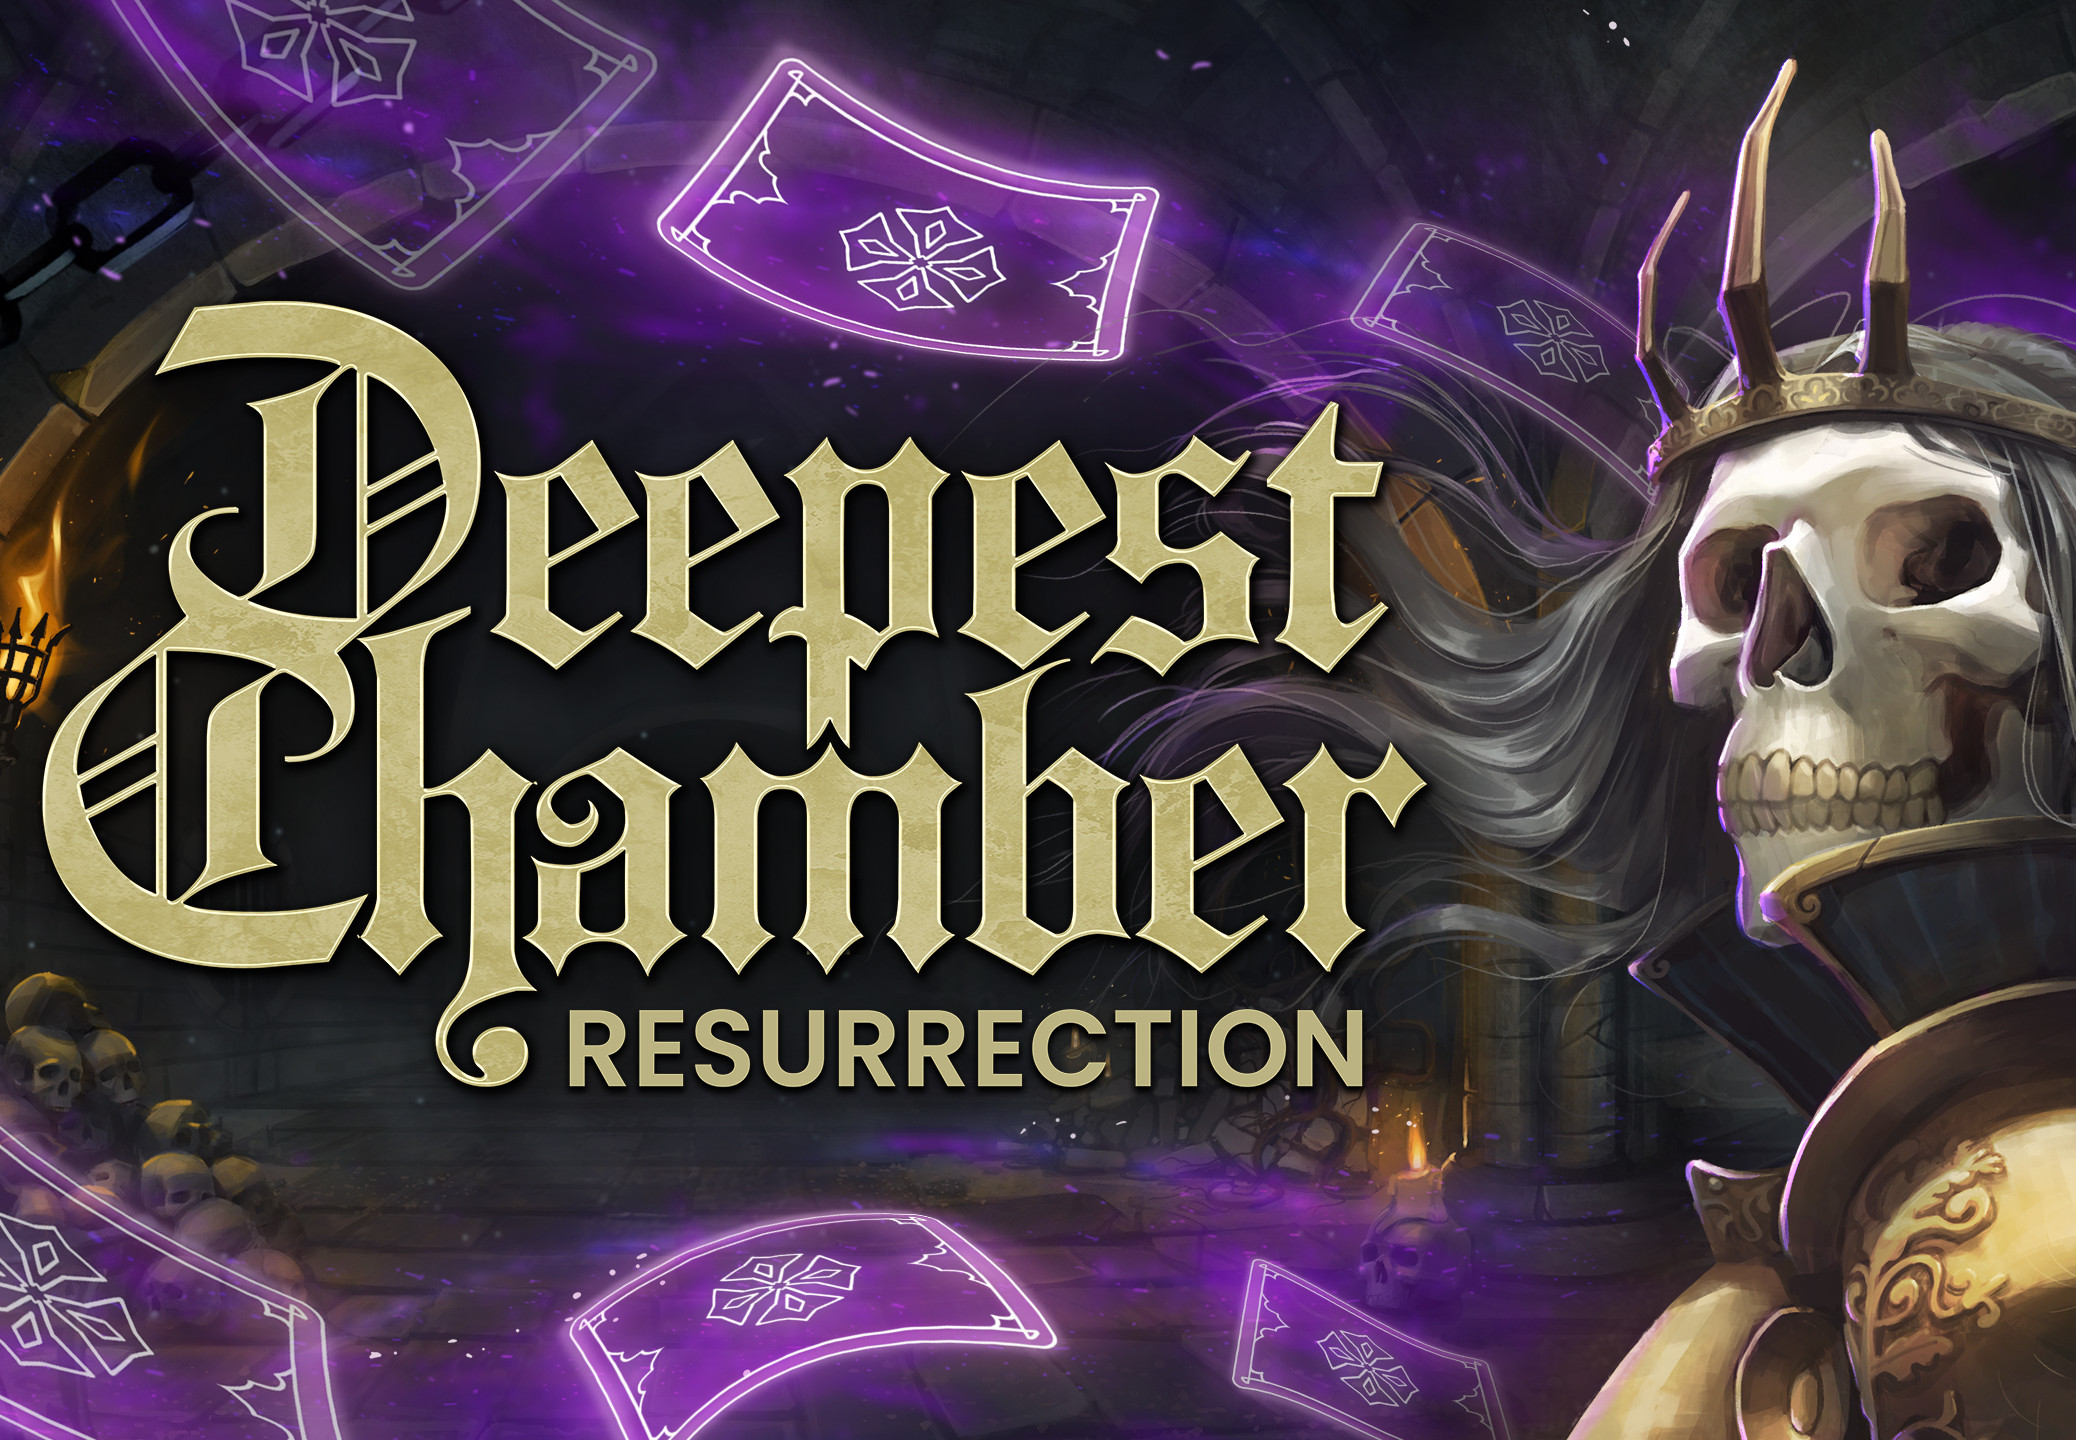 Deepest Chamber: Resurrection Steam CD Key